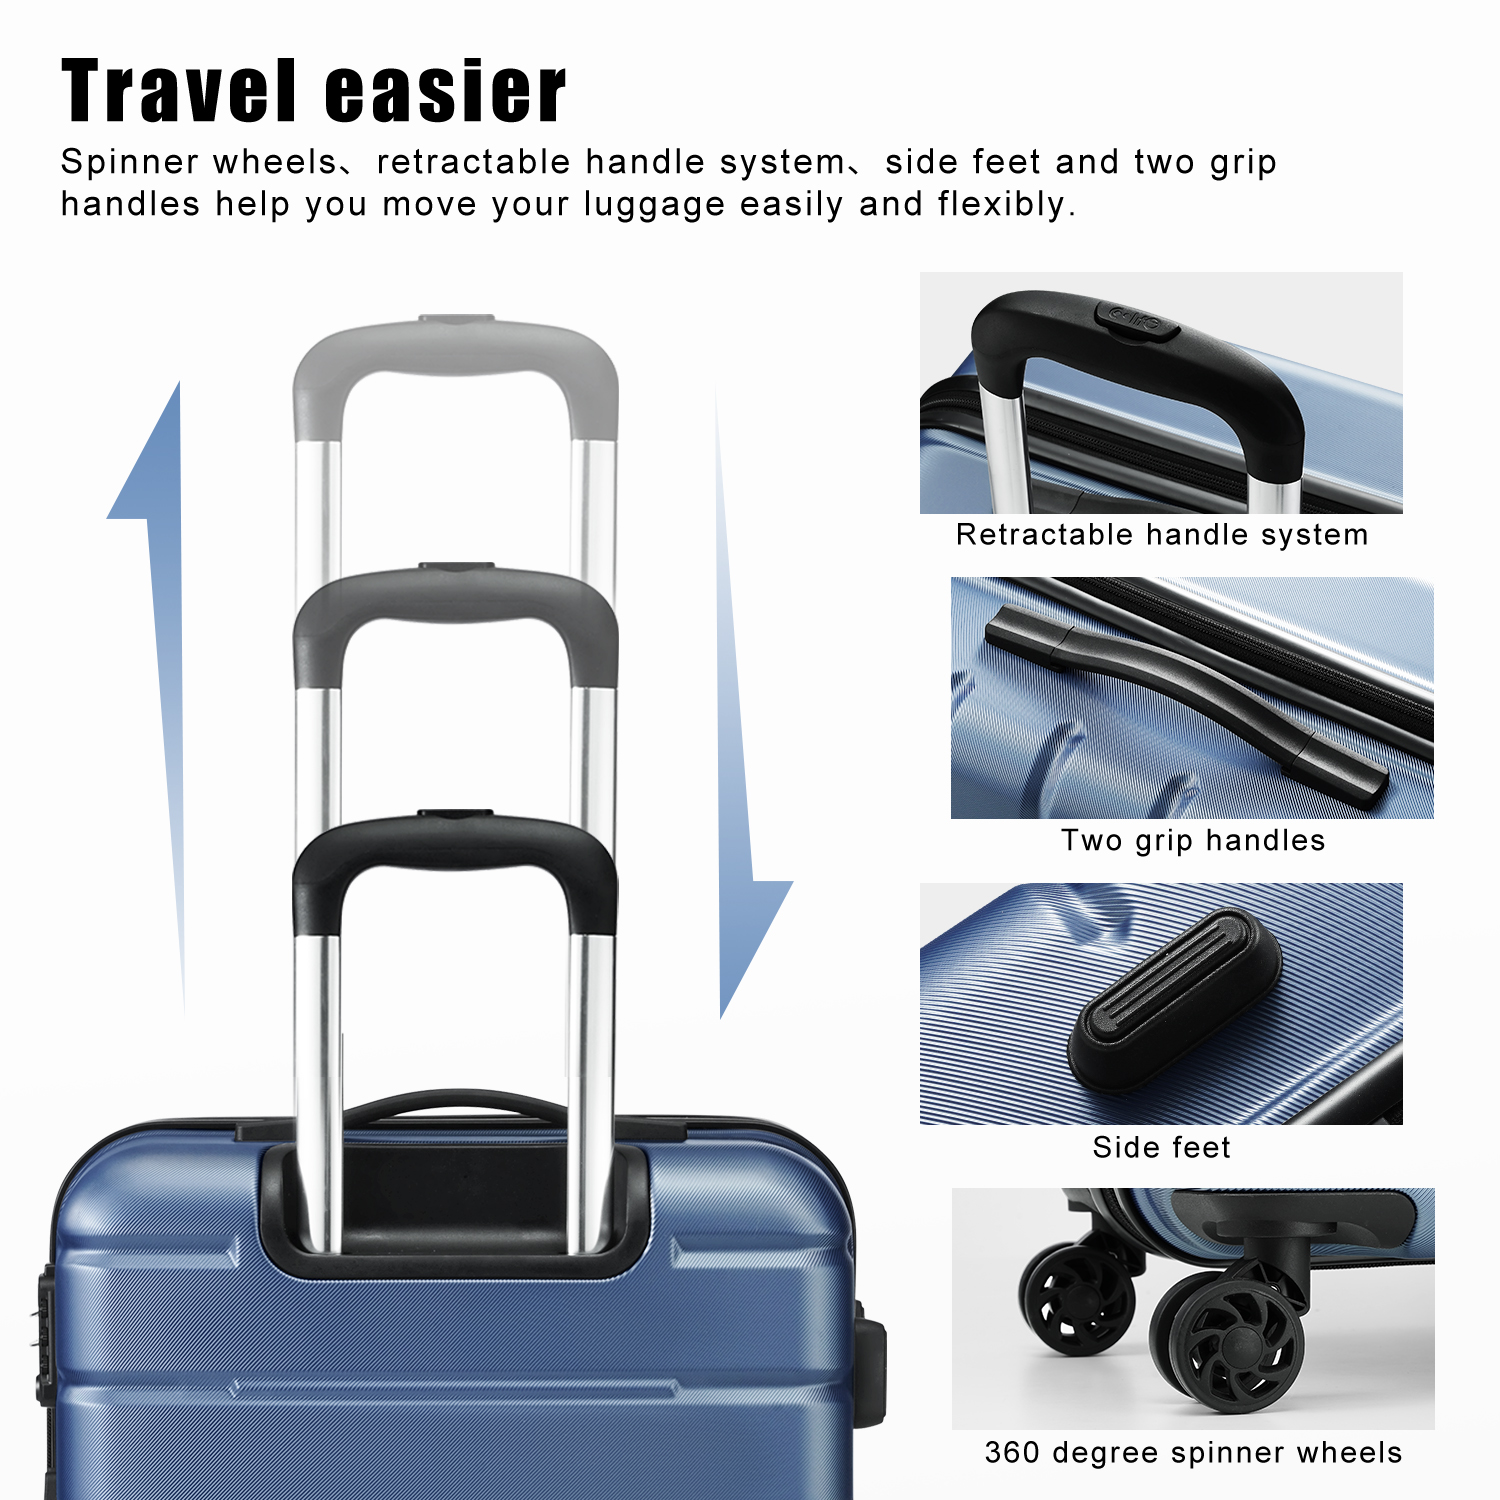 Coolife Luggage Suitcase Carry-on Spinner TSA Lock USB Port Expandable (only 28’’) Lightweight Hardside Luggage